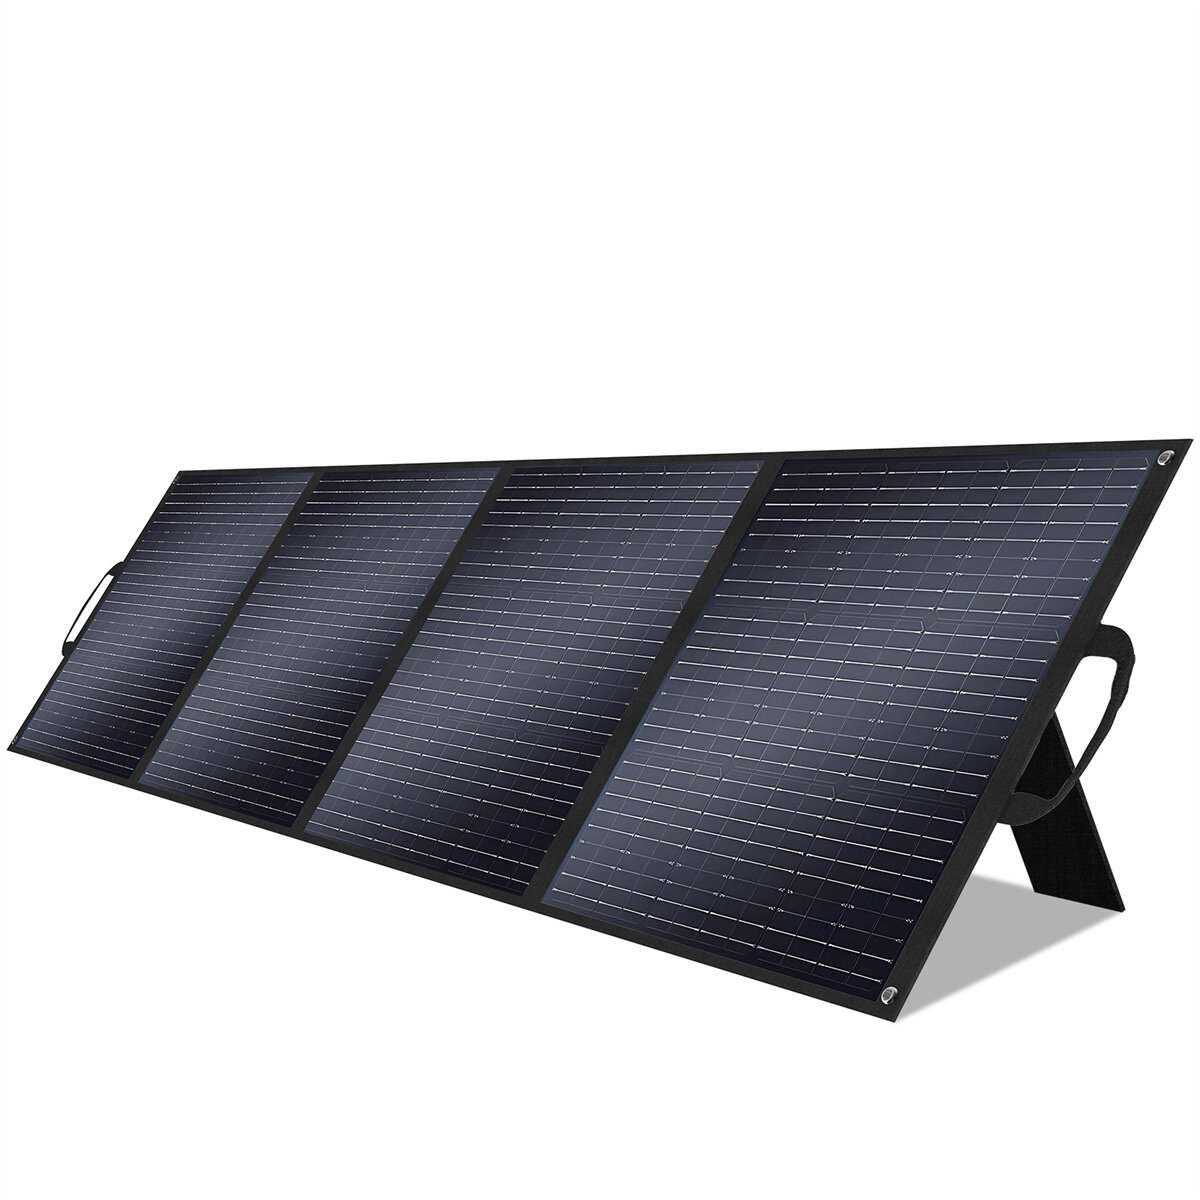 [EU Direct] 1Pc VLAIAN S200 ETFE Solarpanel 200W 23.4% Effizienz Tragbares faltbares Solarpanel für Terrasse, Wohnmobil, Outdoor-Camping, Stromausfall, Notfall